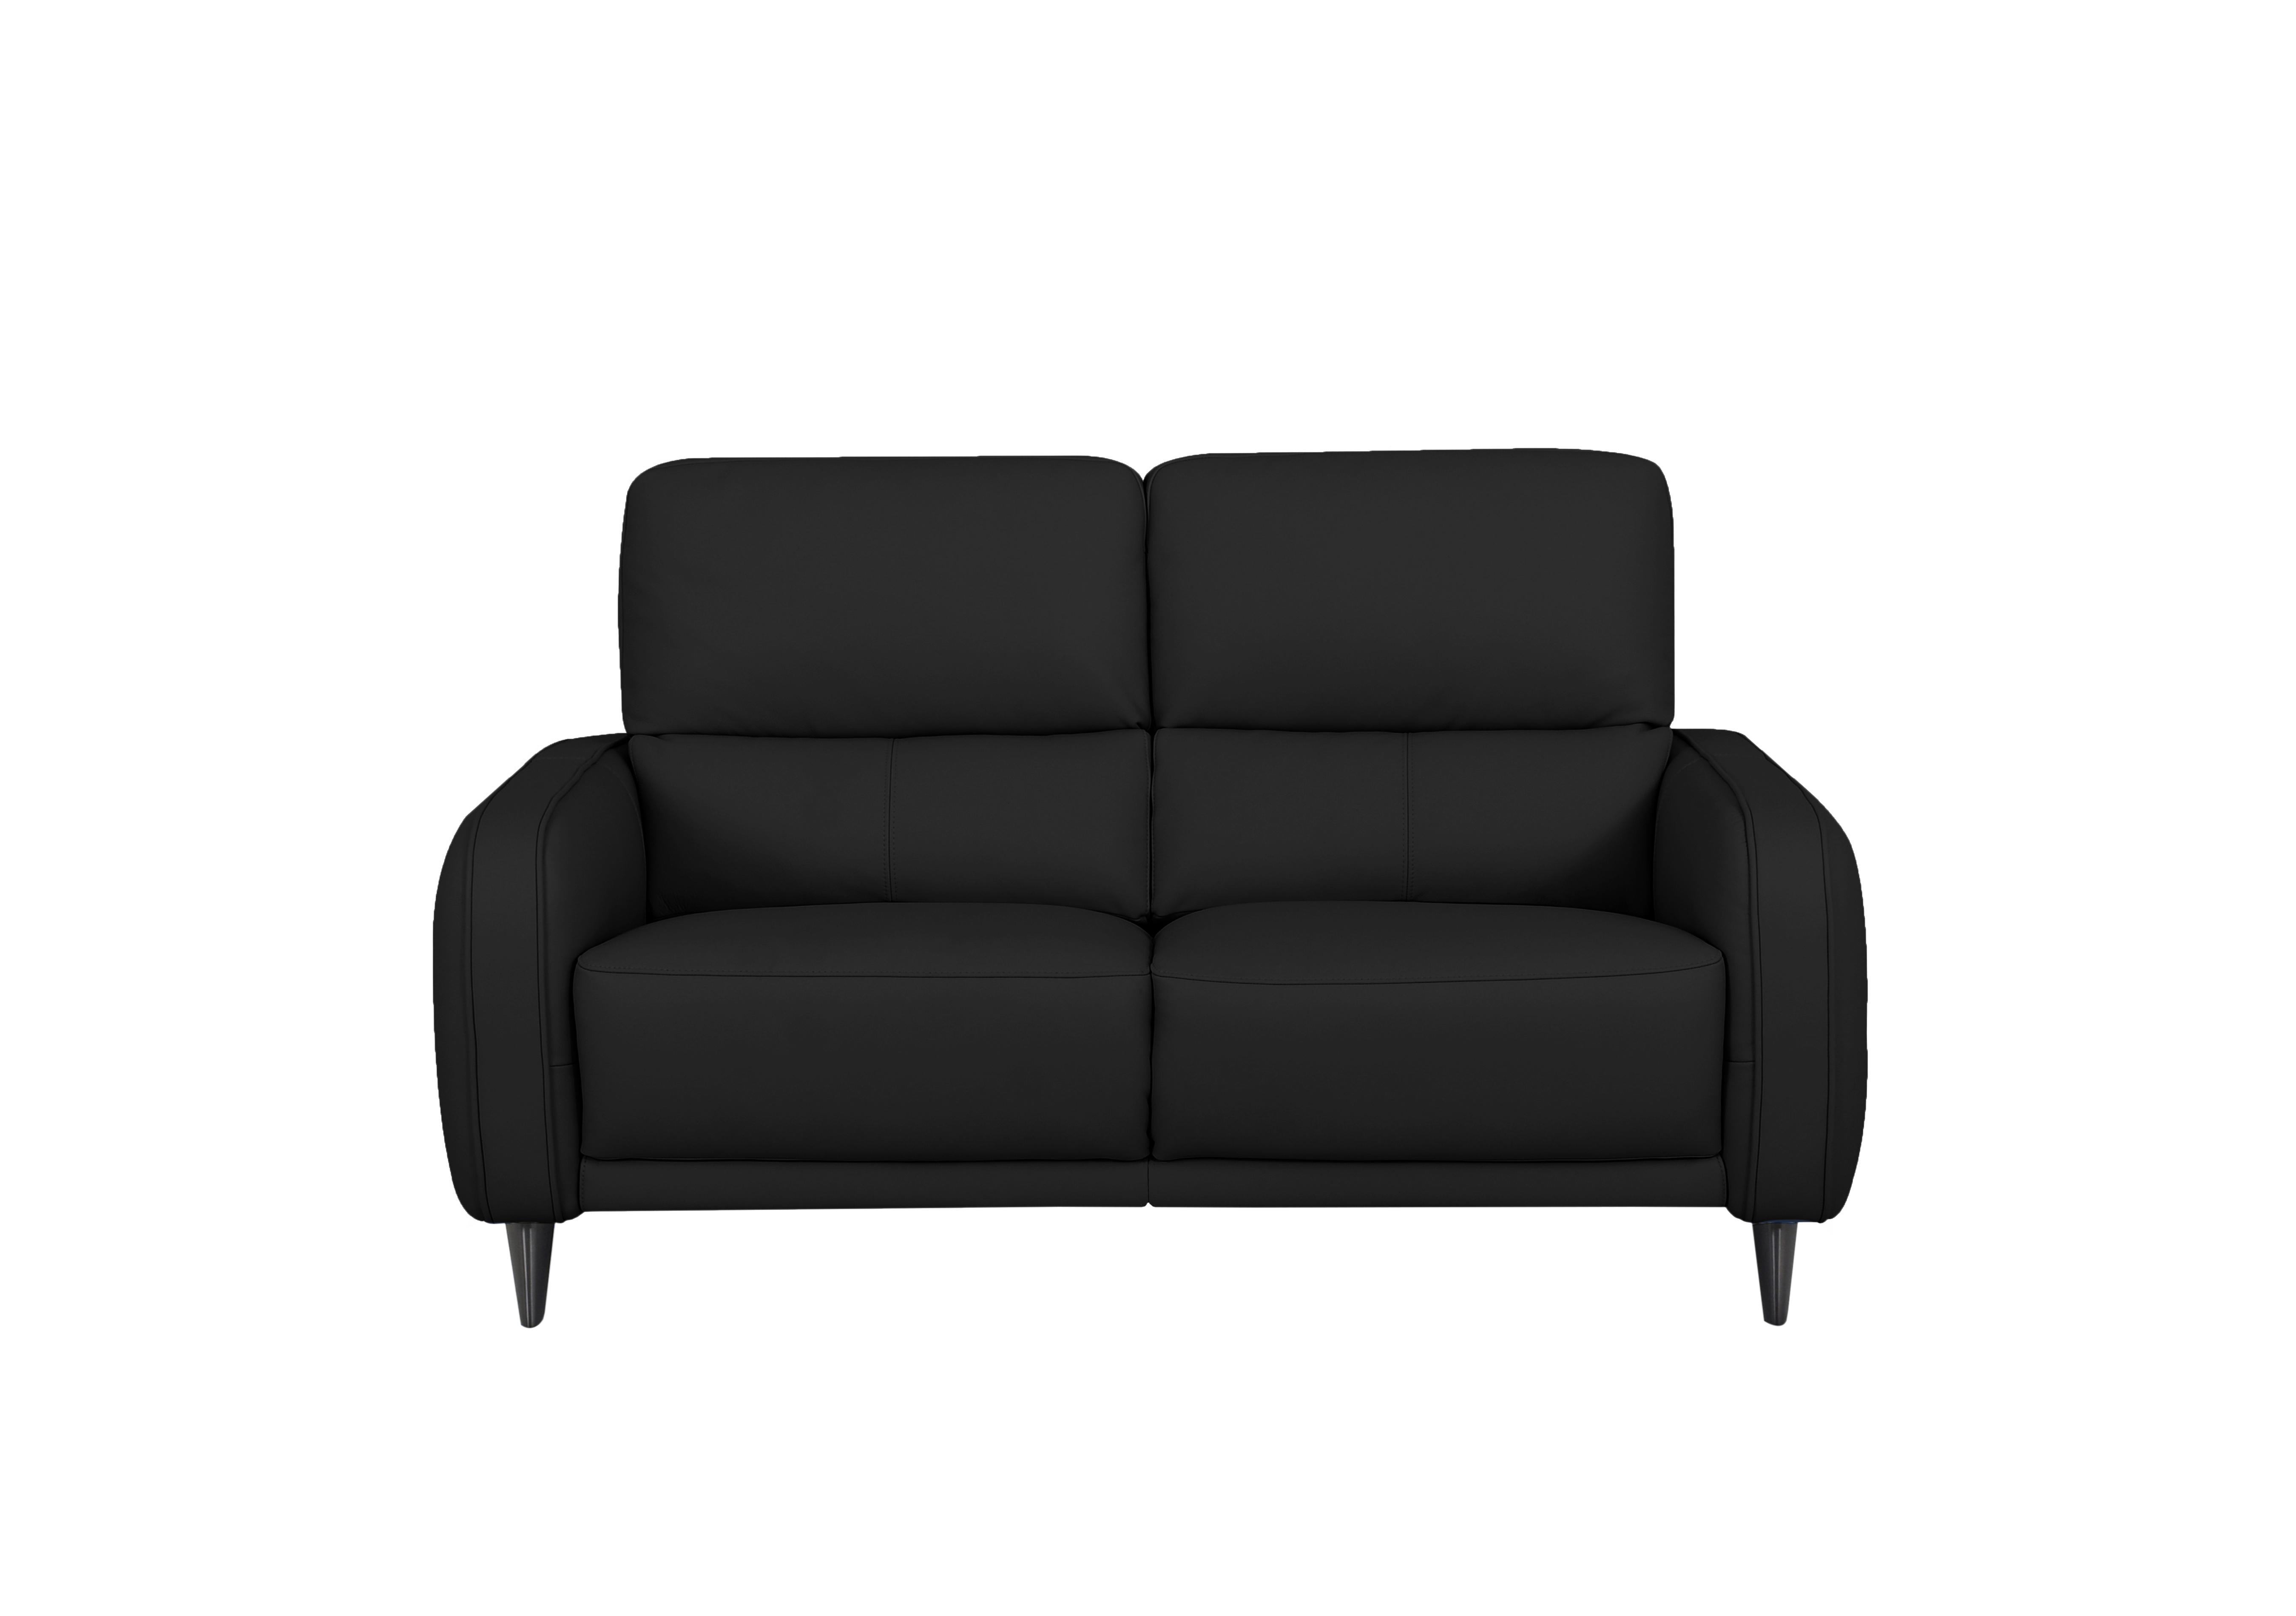 Logan 2.5 Seater Leather Sofa in Nn-514e Black on Furniture Village